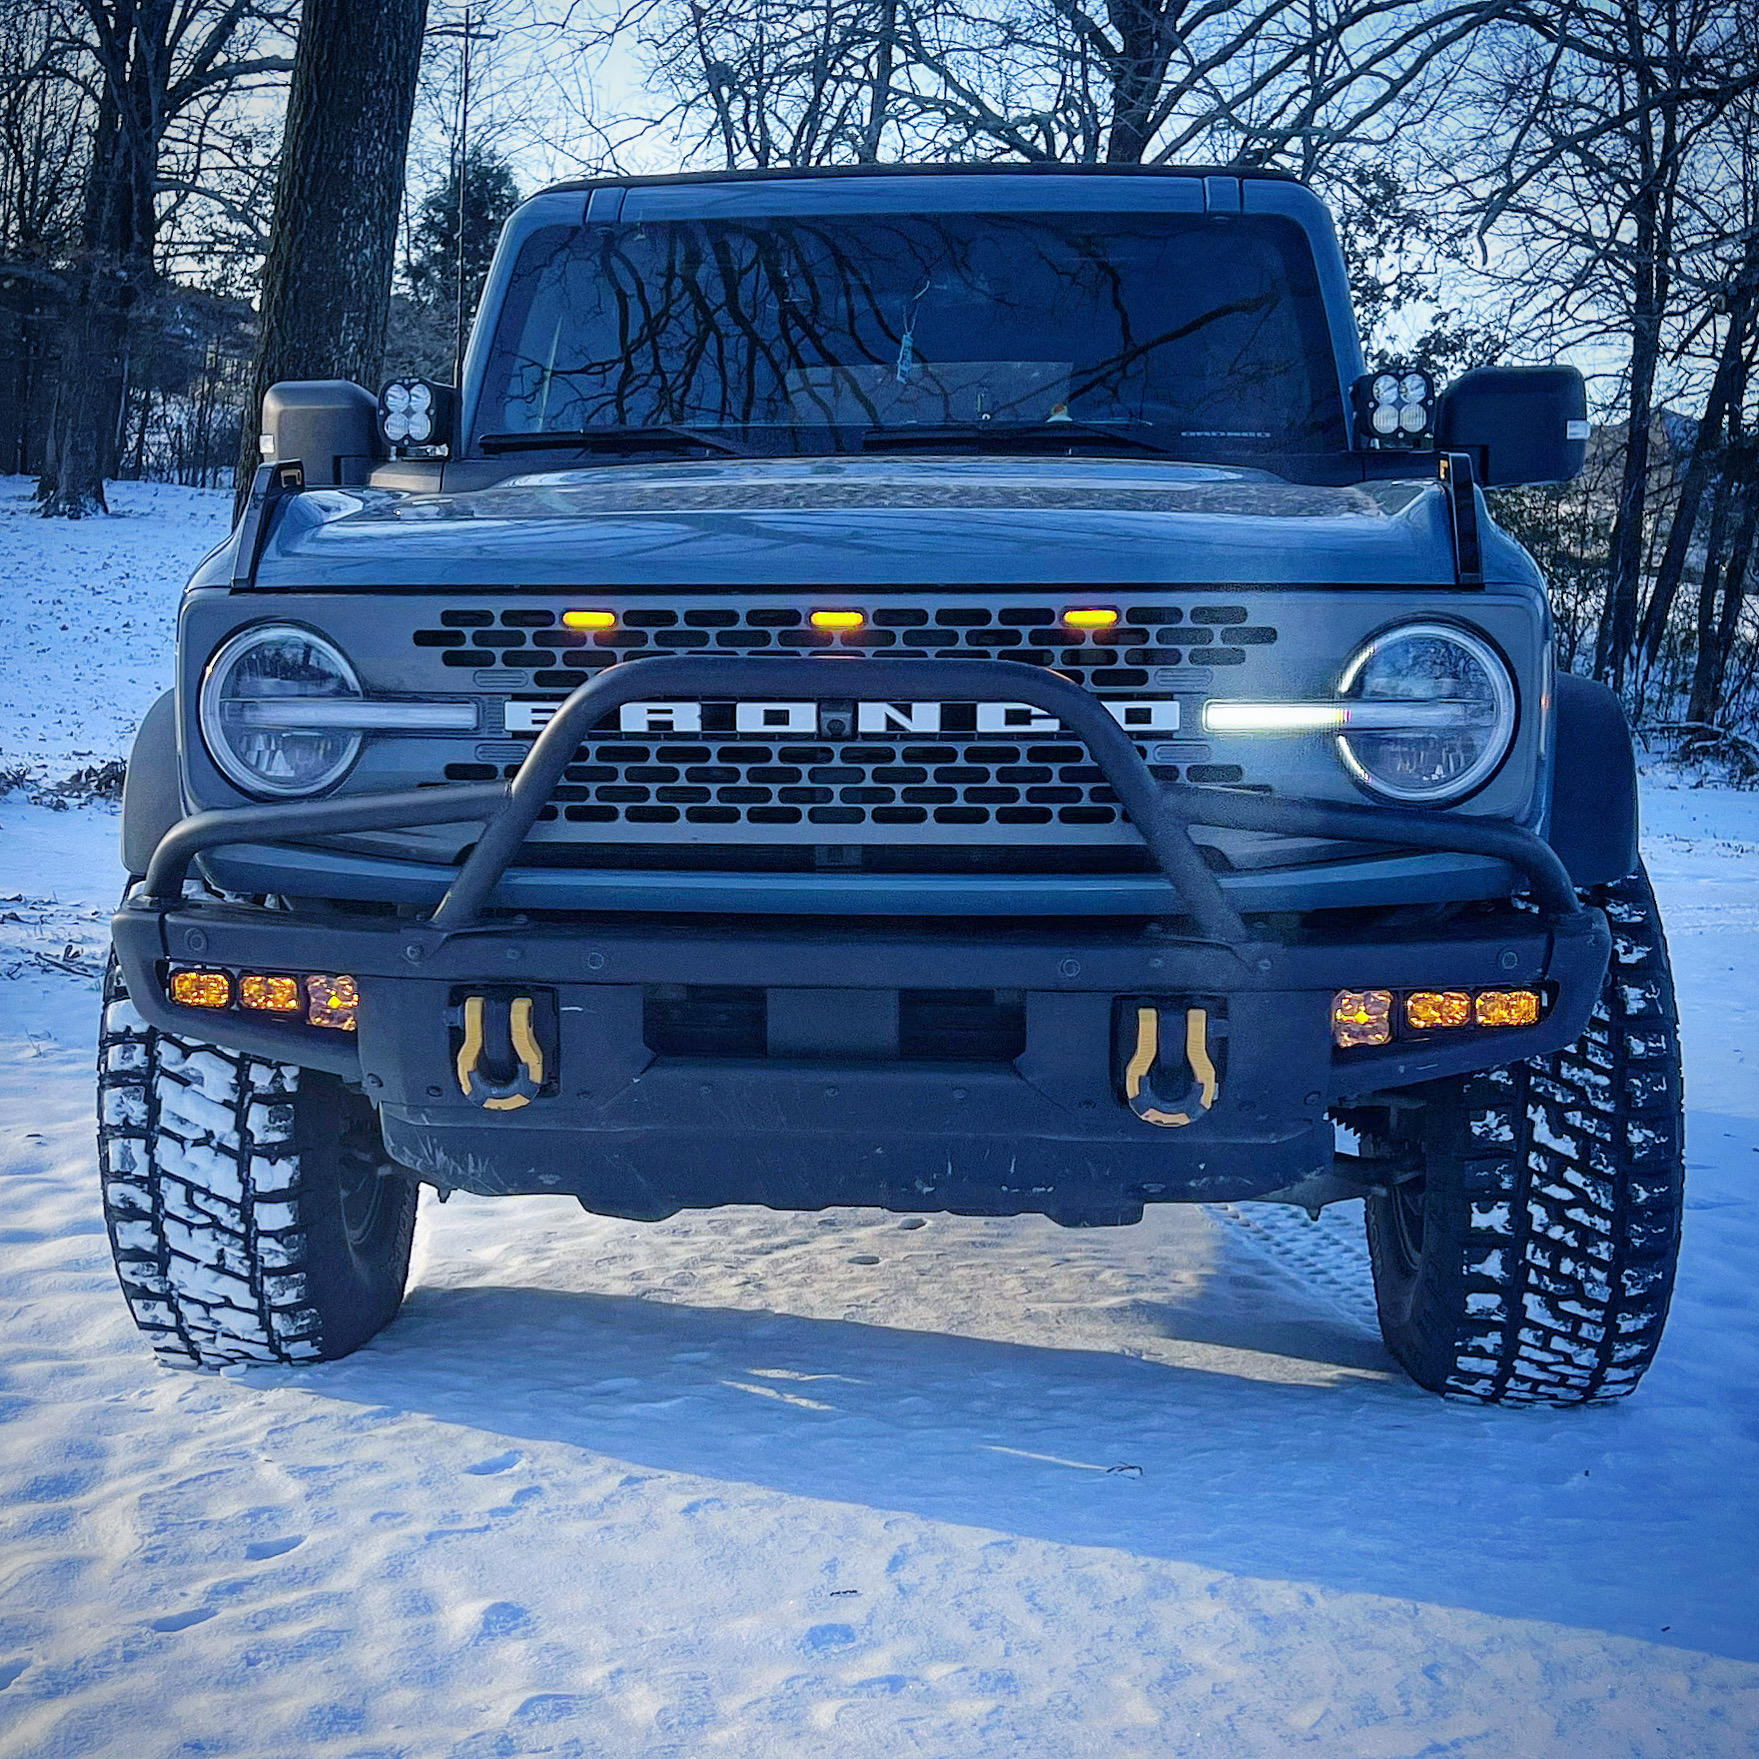 Ford Bronco Show us your Bronco snow pics!! ☃️❄️🥶 6D57210B-C442-44CC-AE46-C7EAC1BDA4B2